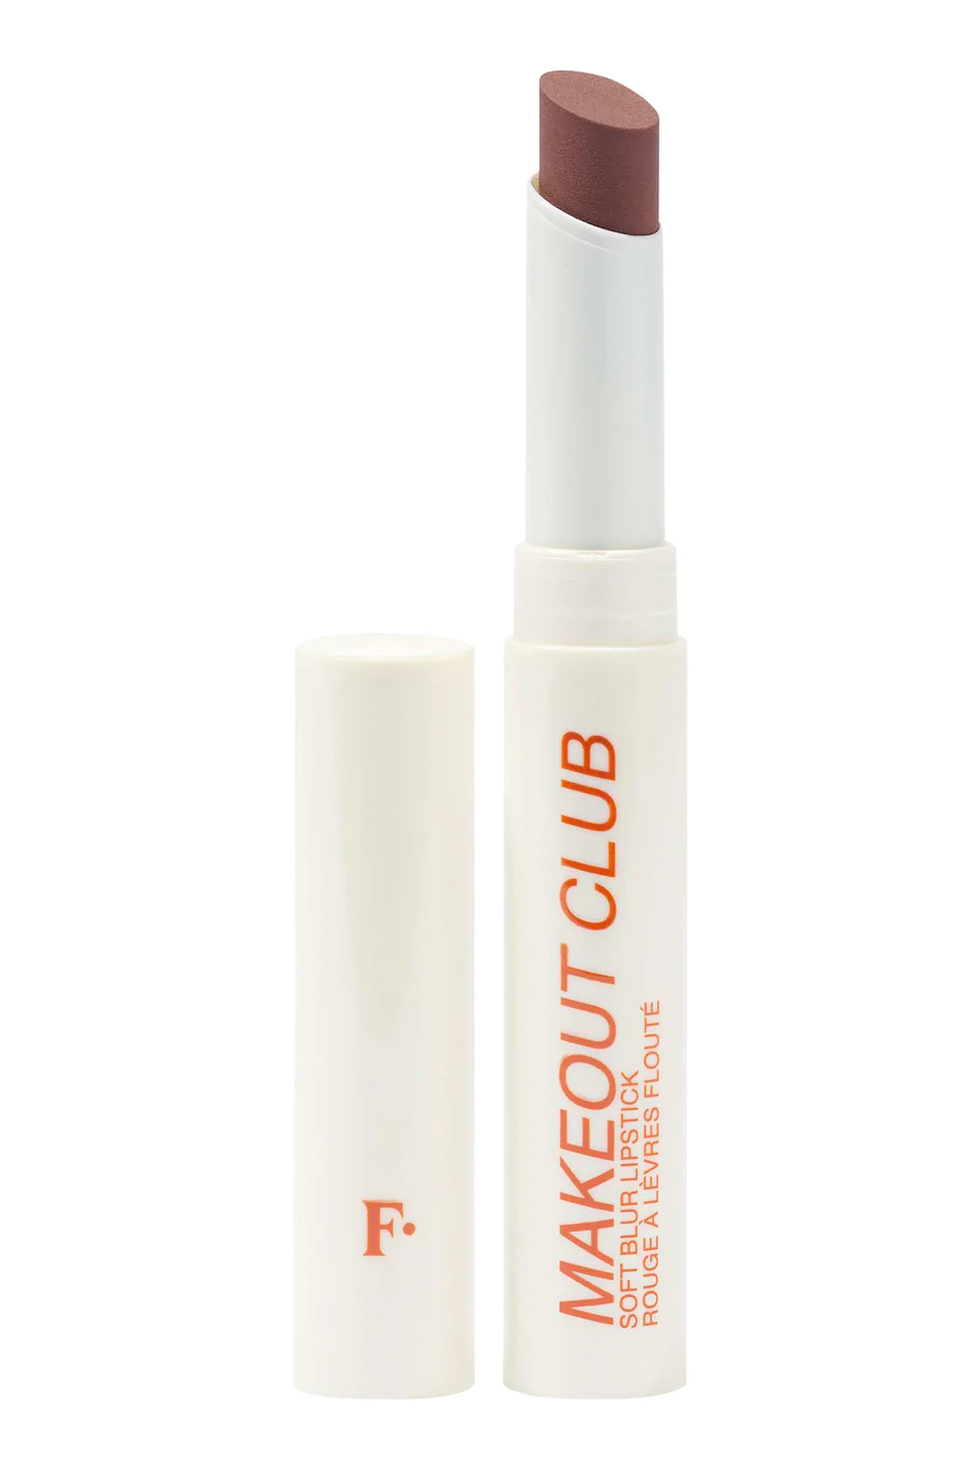 Freck Beauty Makeout Club Soft Blur Lipstick